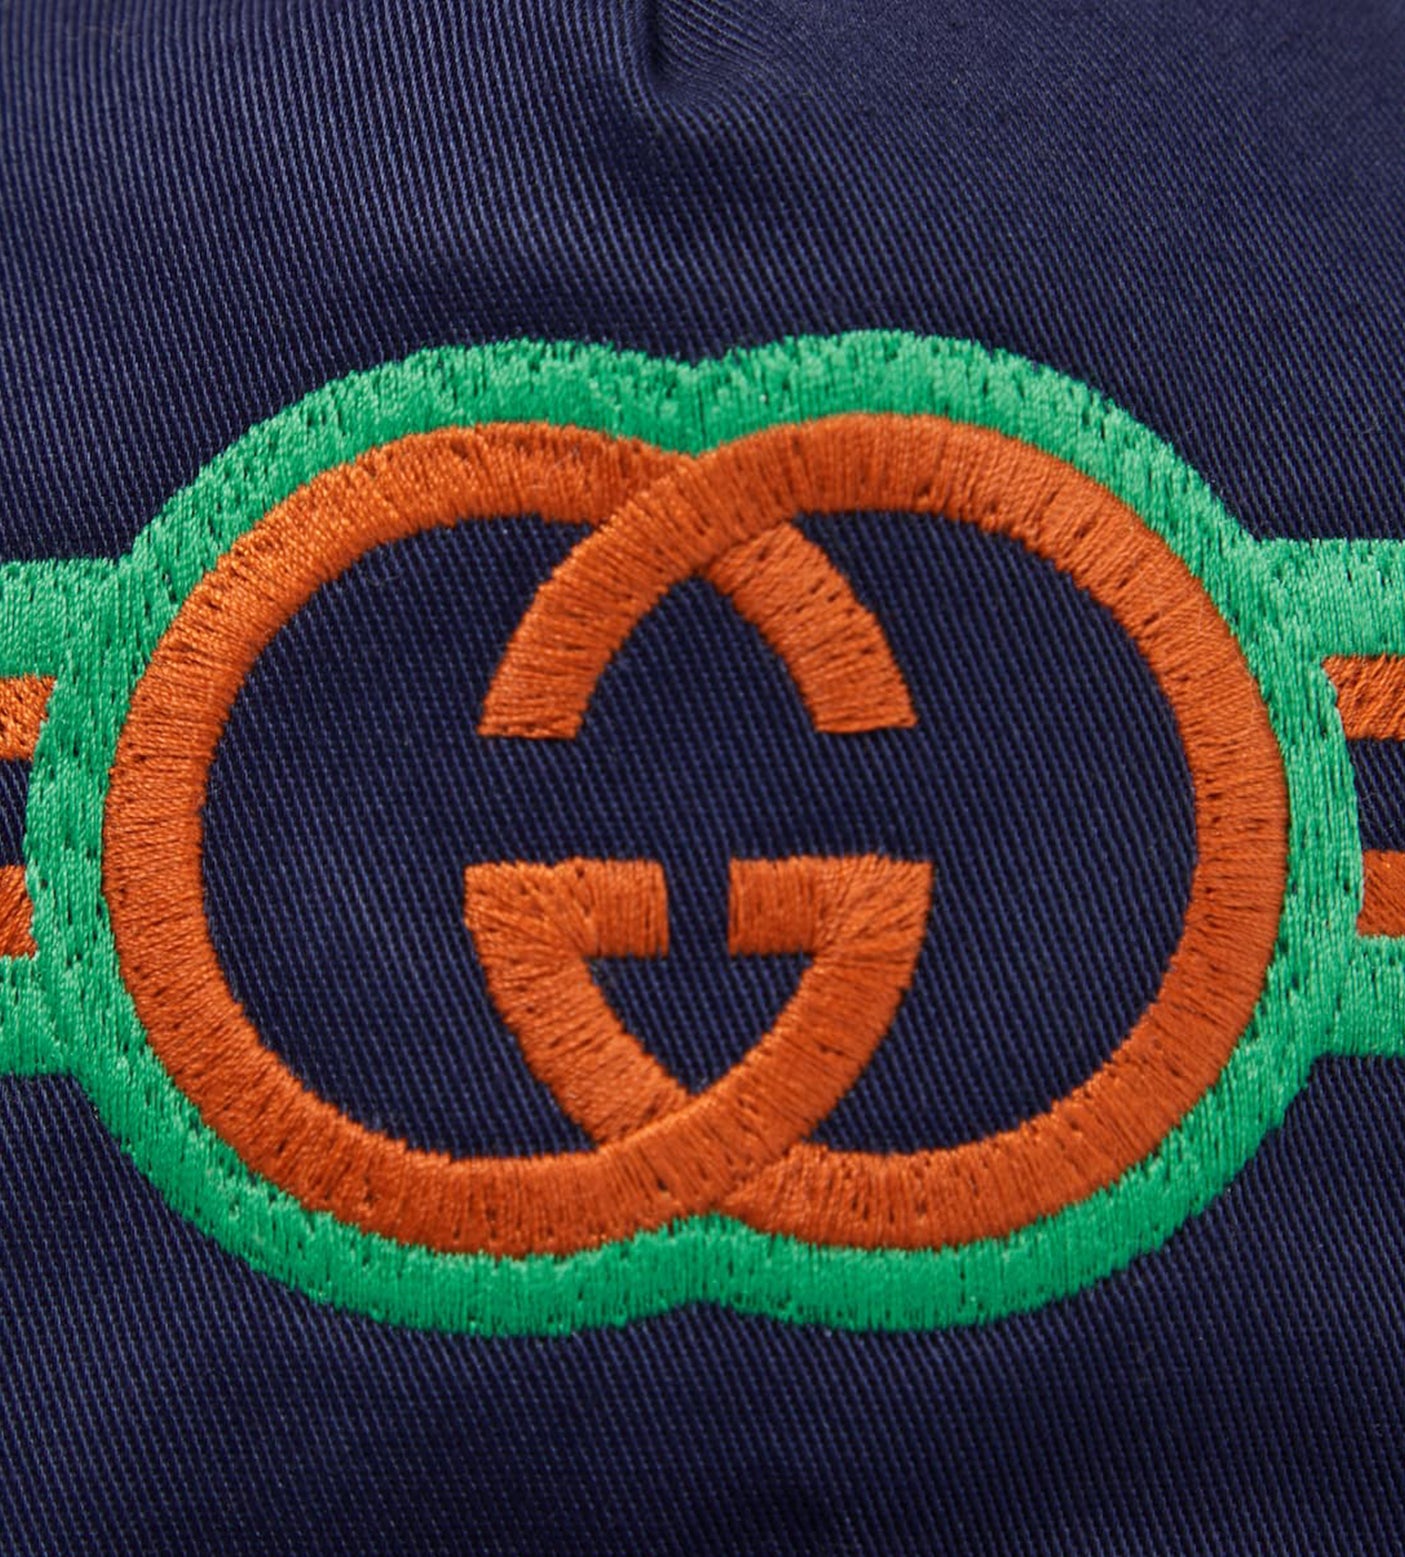 Interlocking G-logo Baseball Cap Blue